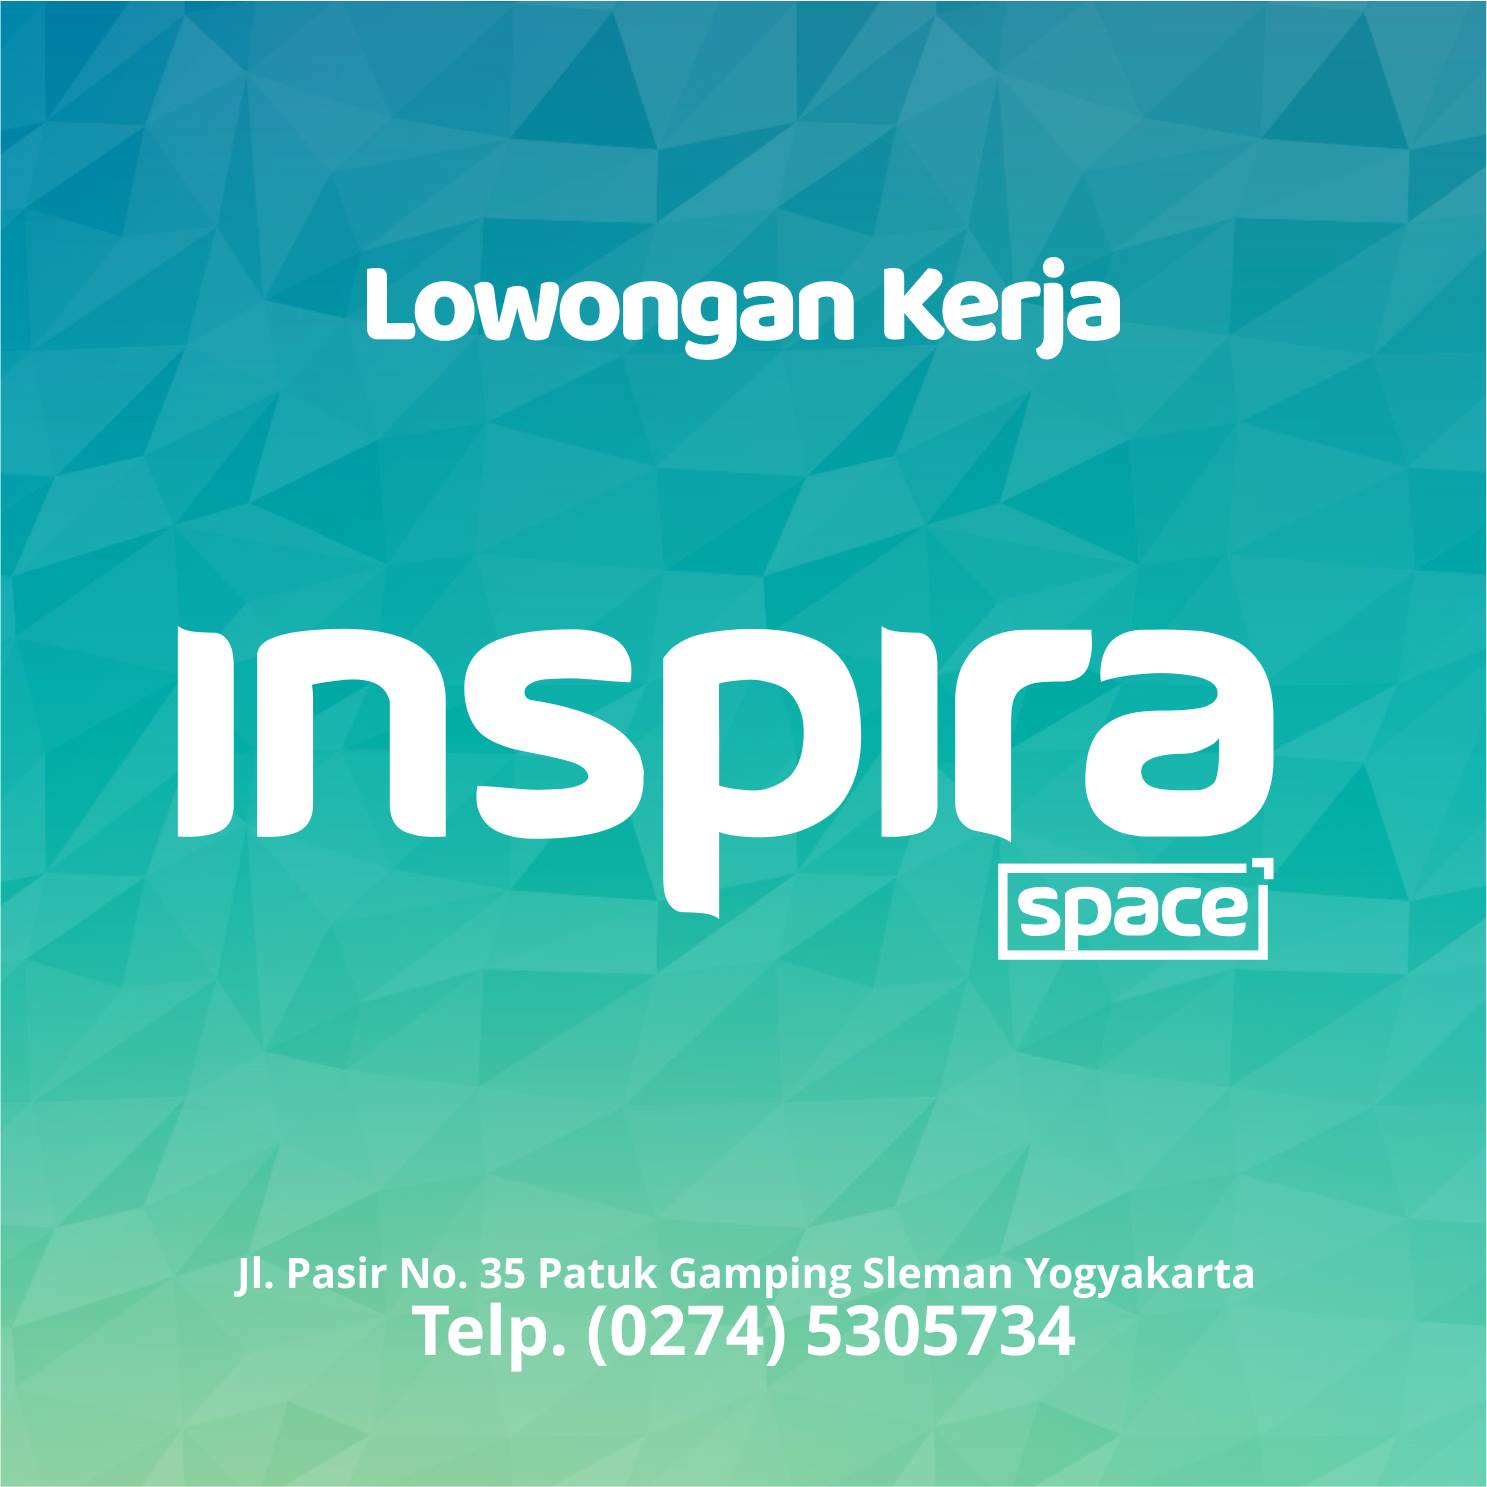 Lowongan Kerja di InspiraSpace Yogyakarta Customer Service Digital Marketing Marketing Marketplace Product Designer Desain Grafis Copy Writer